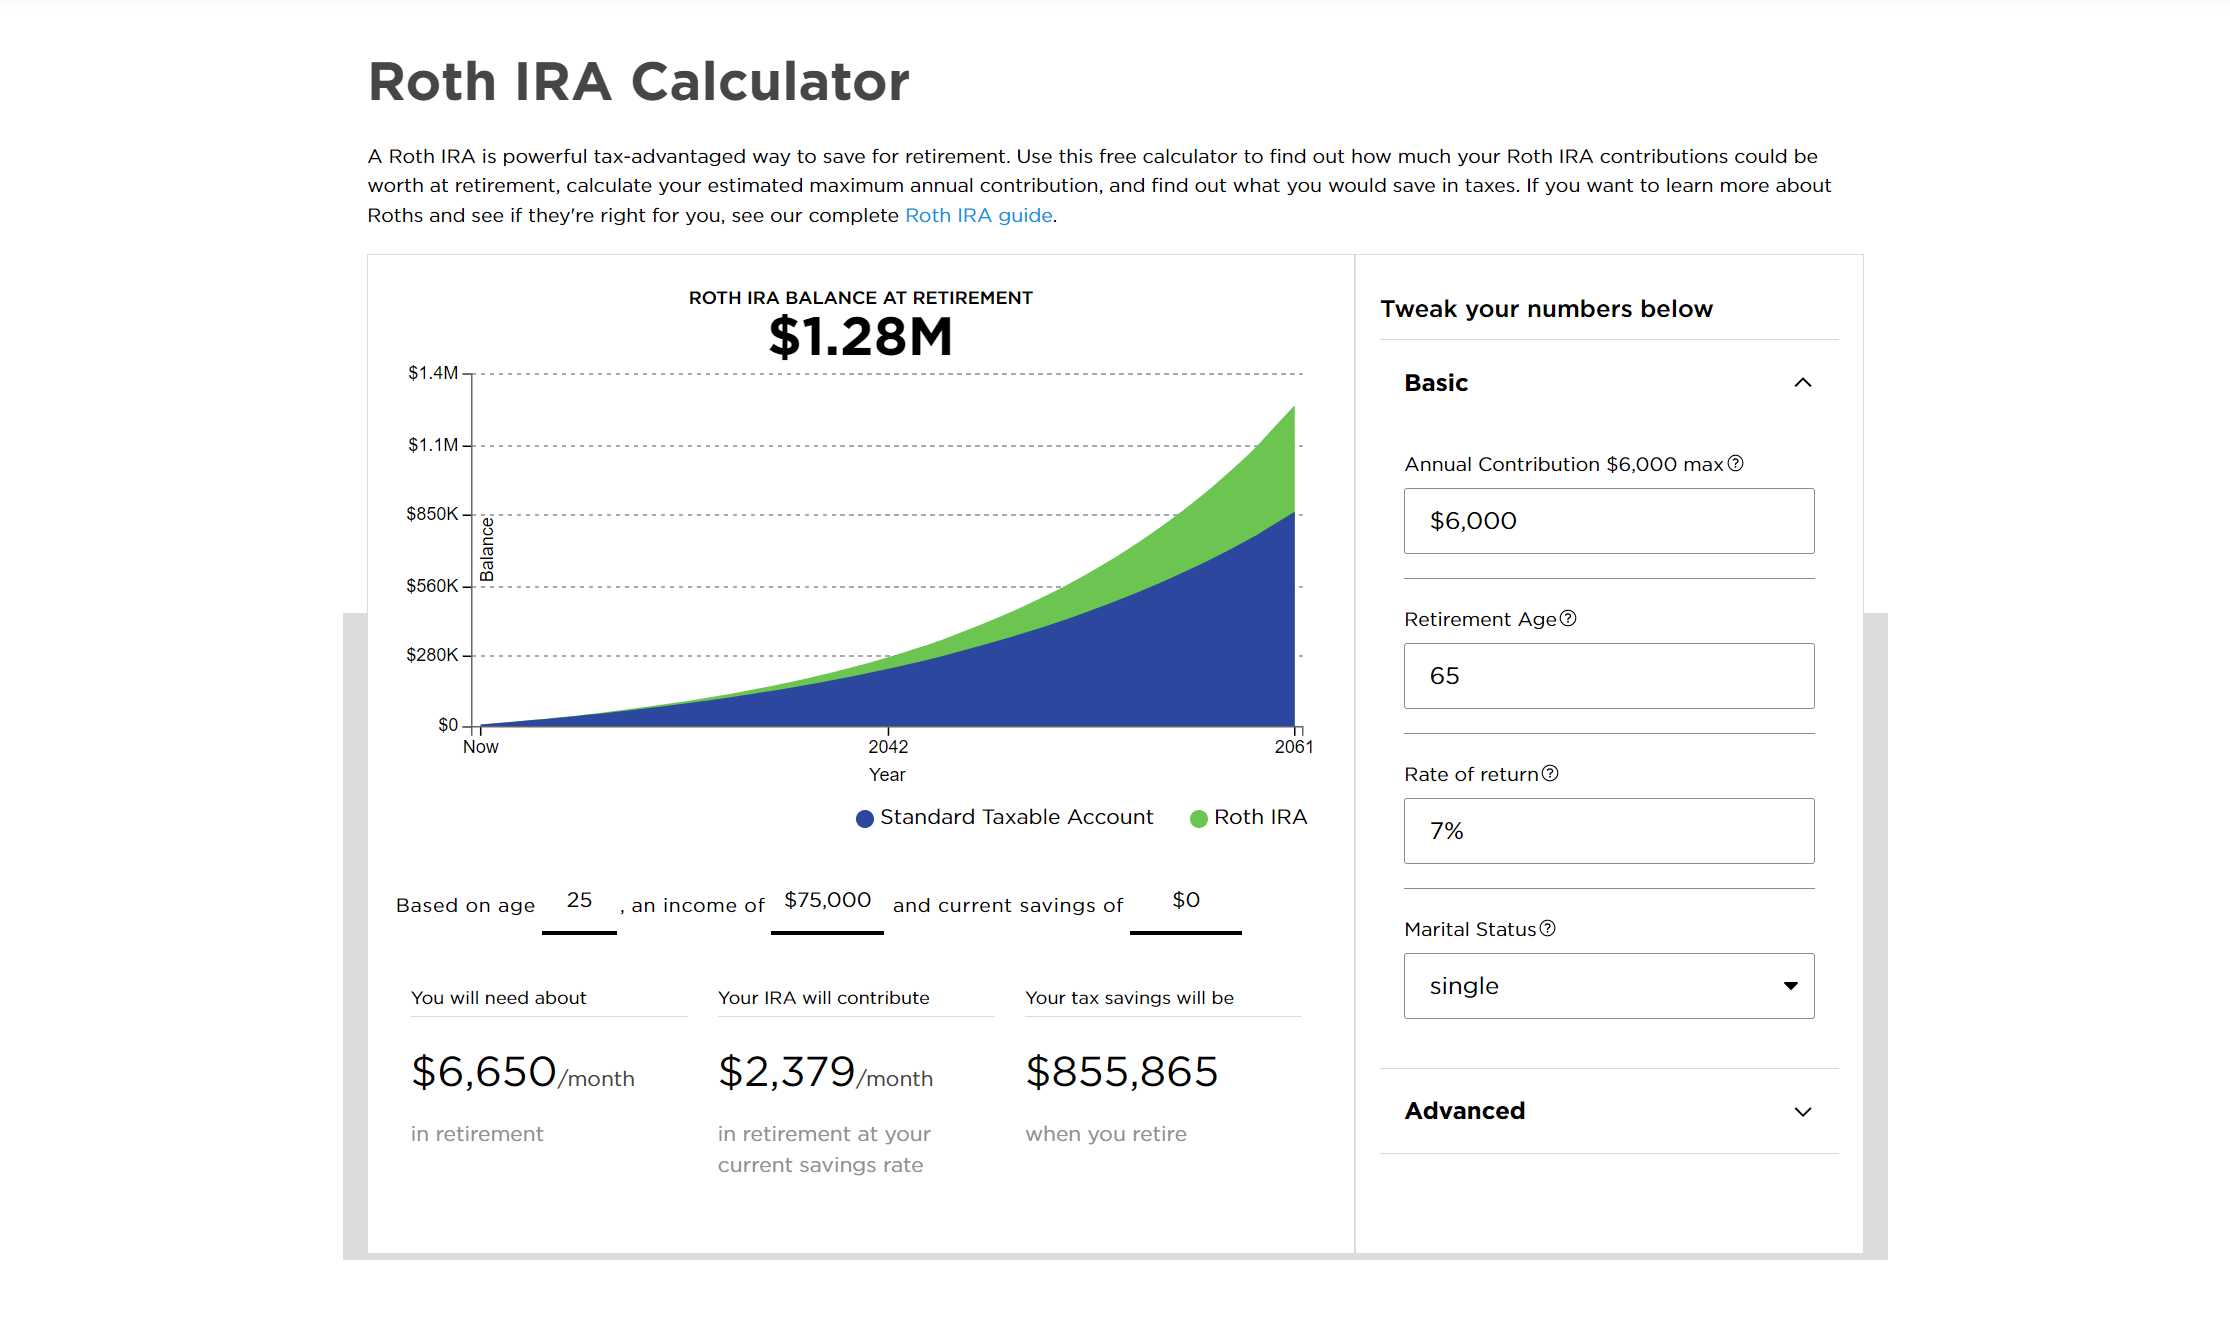 Roth IRA balance at retirement from NerdWallet's Roth IRA Calculator